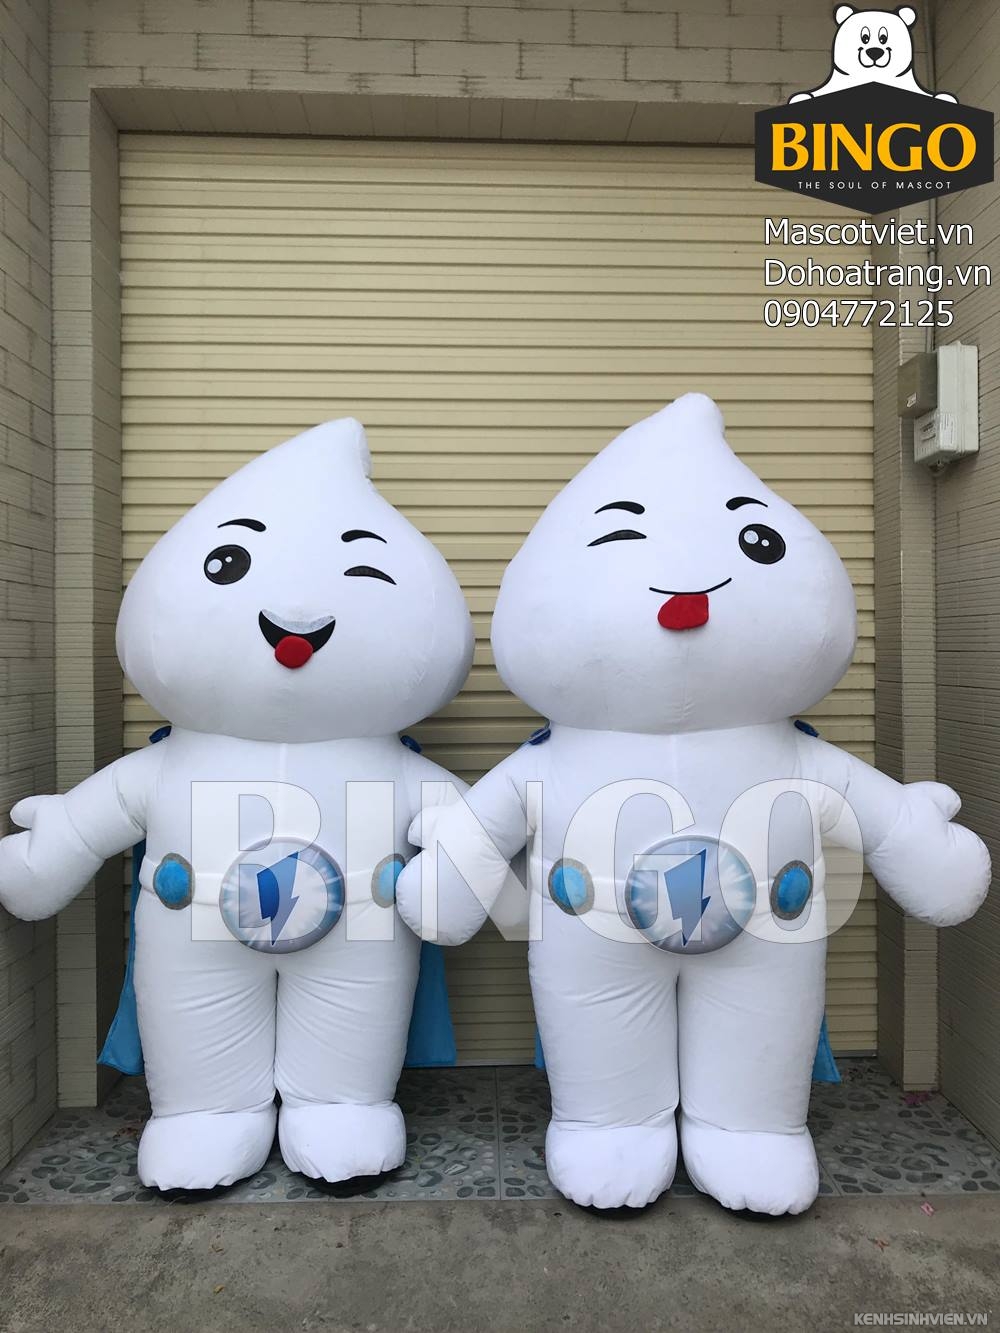 mascot-hoi-linh-vat-sua-fristi-bingo-costumes-0904772125.jpg